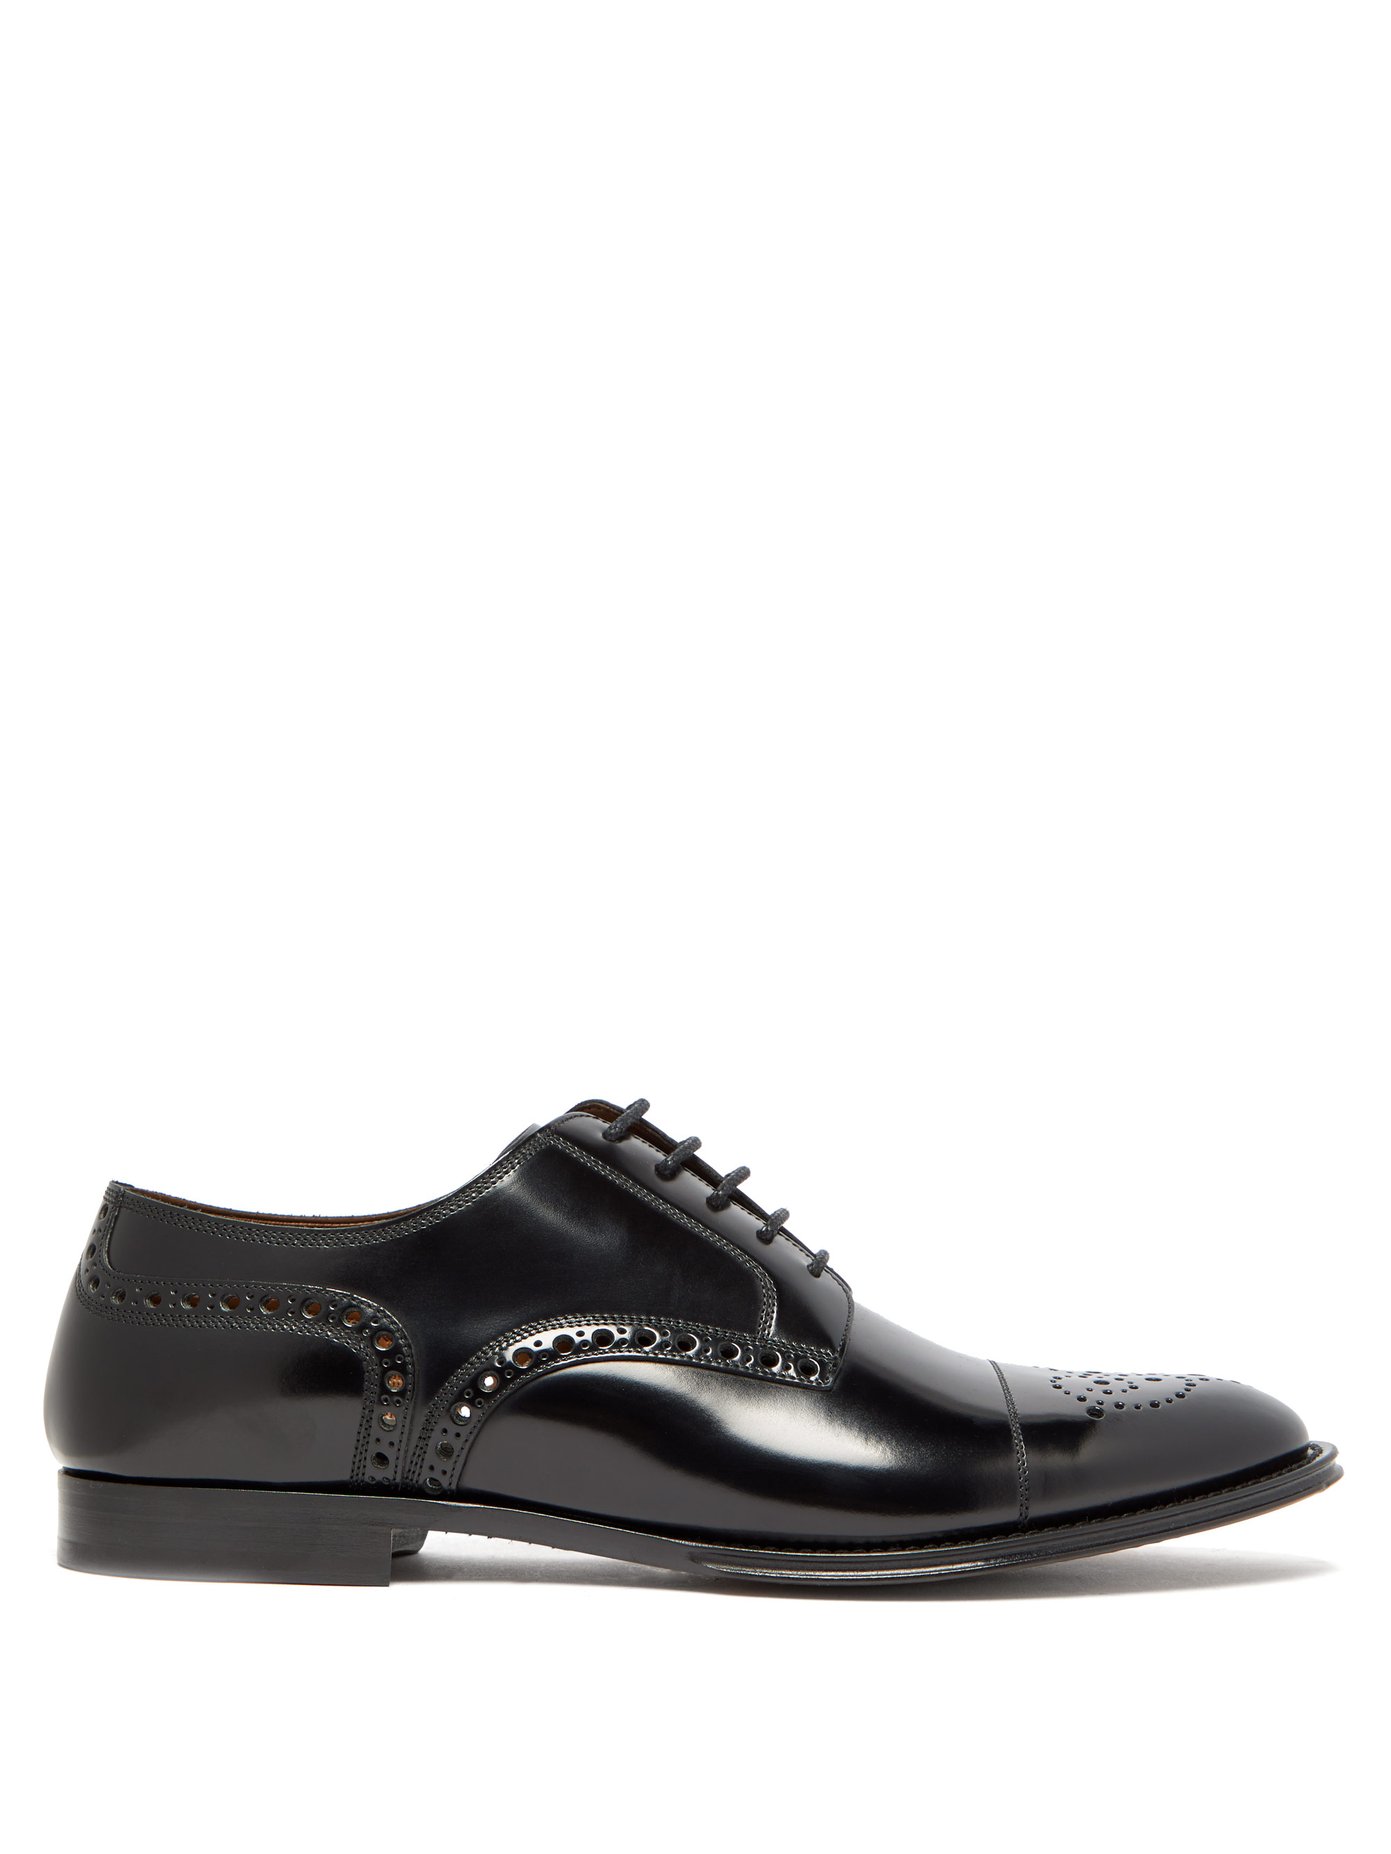 Leather derby shoes | Dolce \u0026 Gabbana 